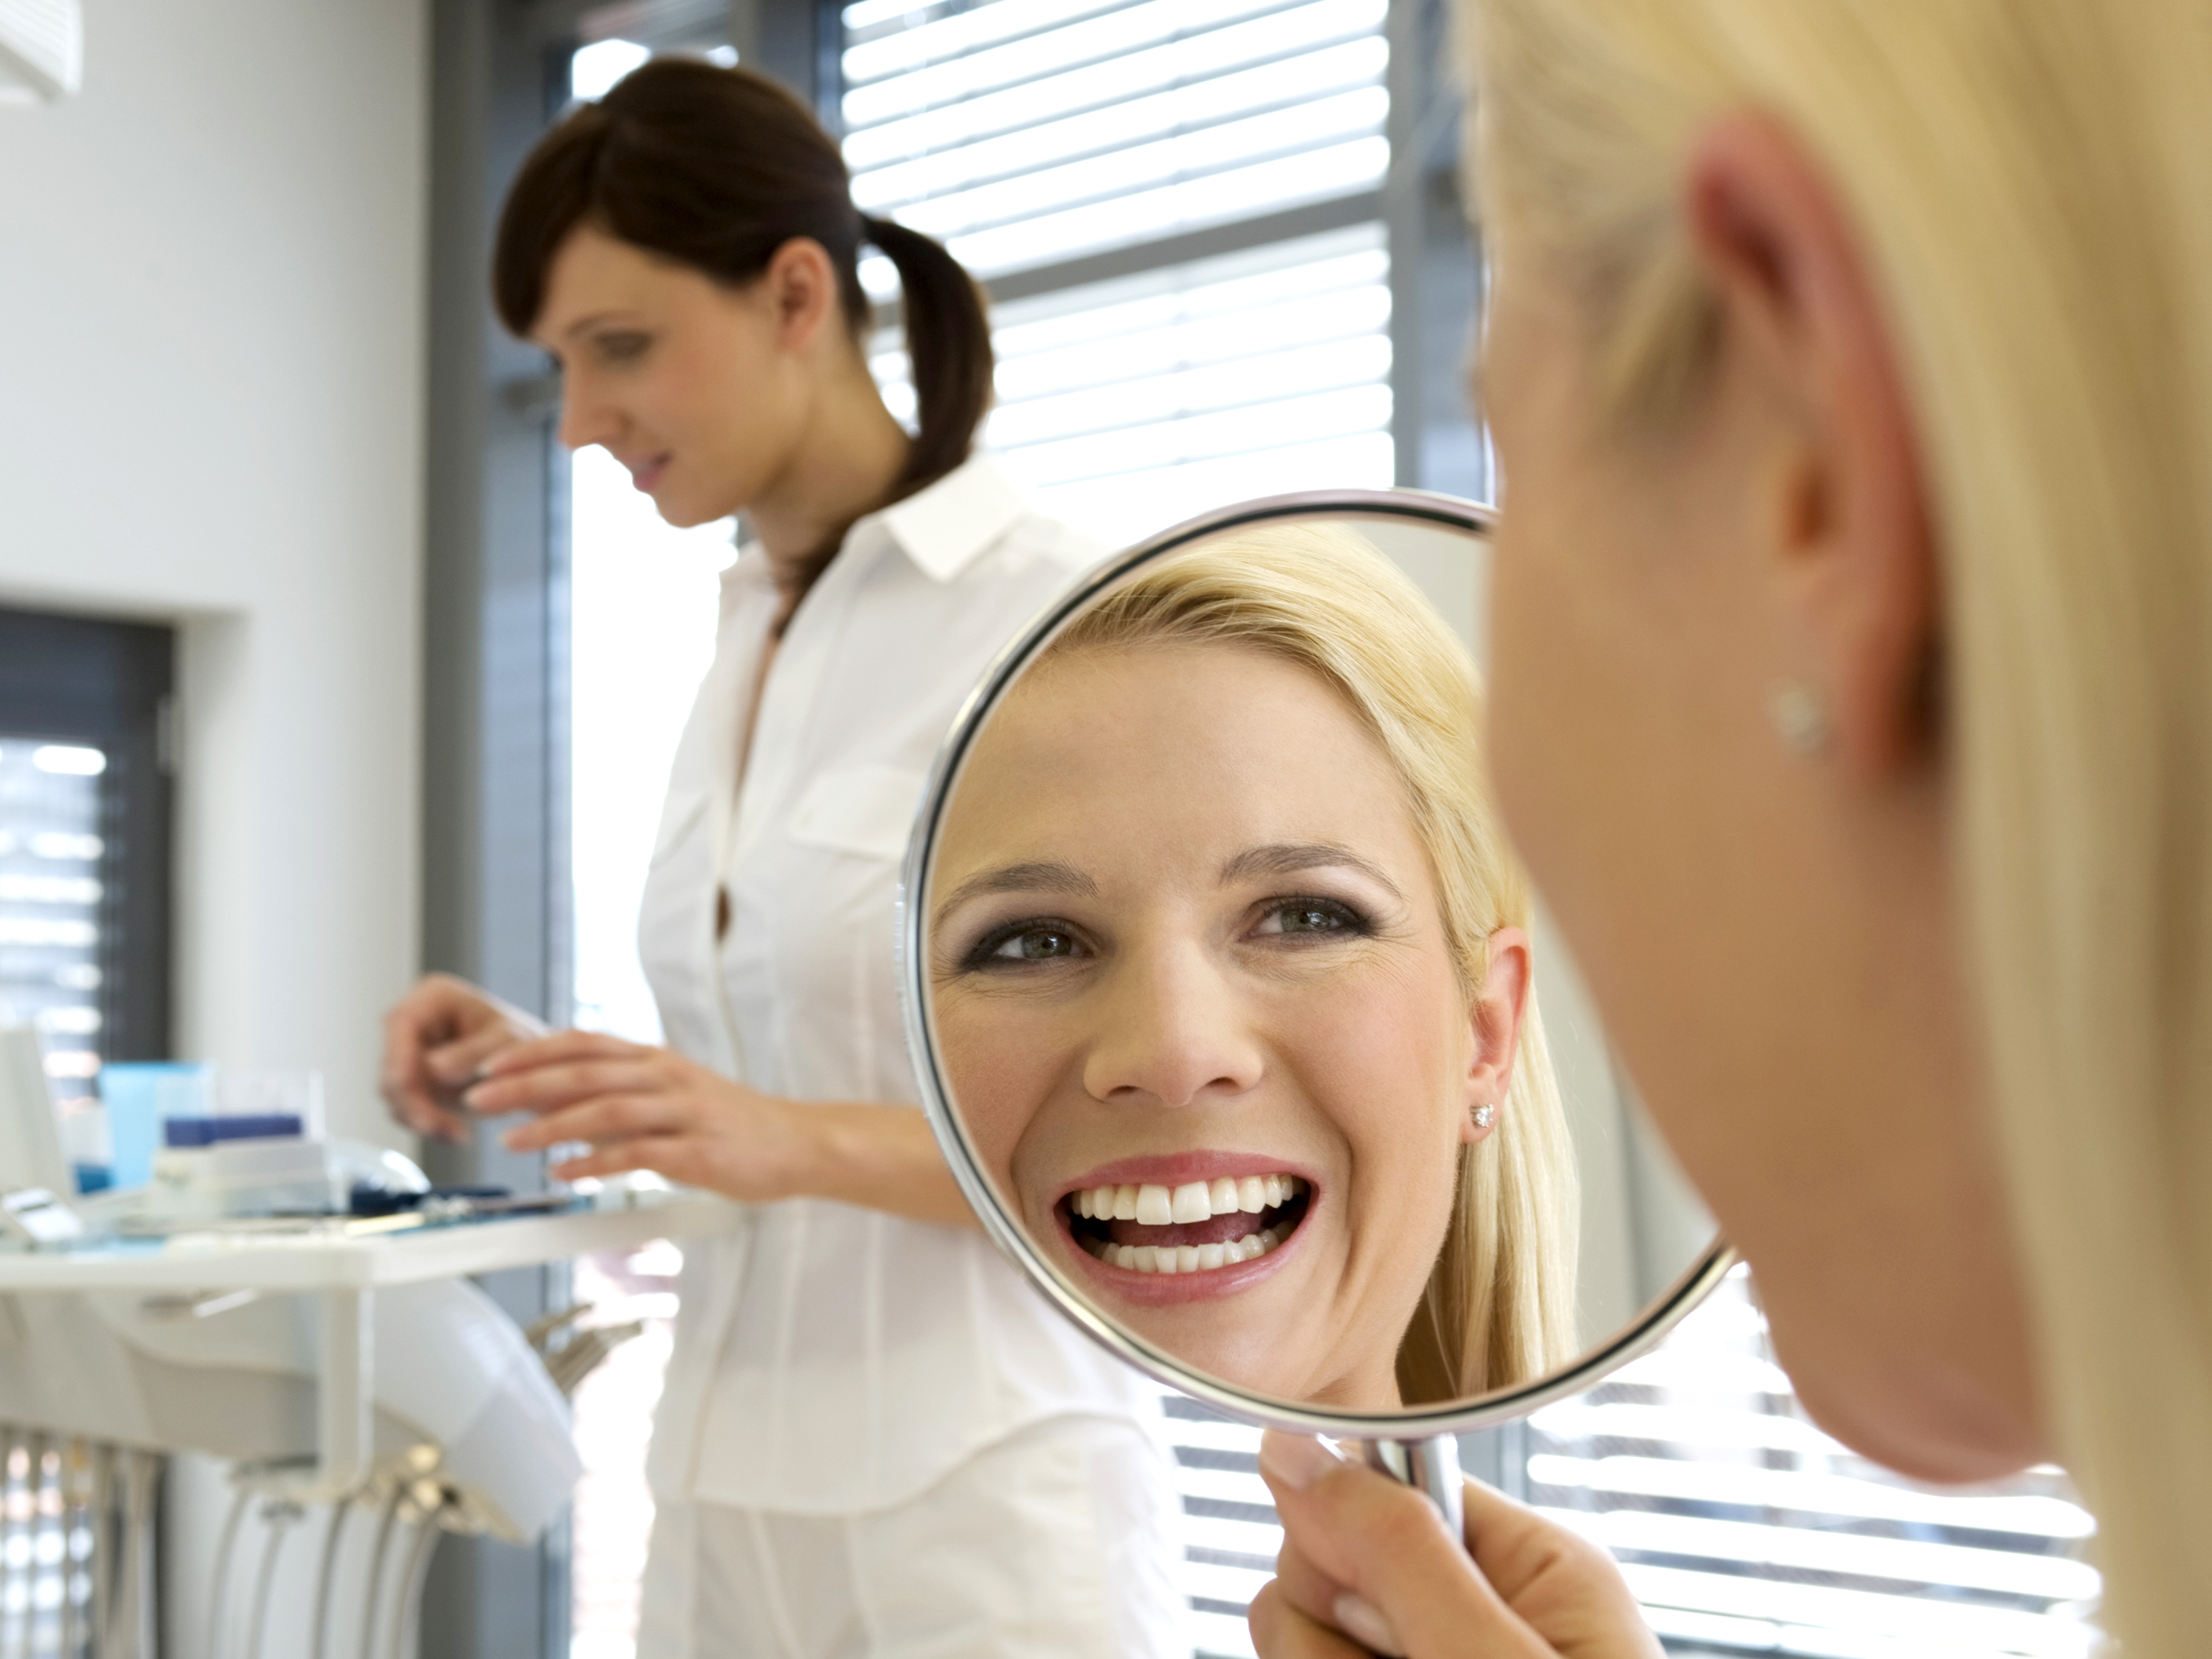 Dental-patient-smiling-in-mirror-1